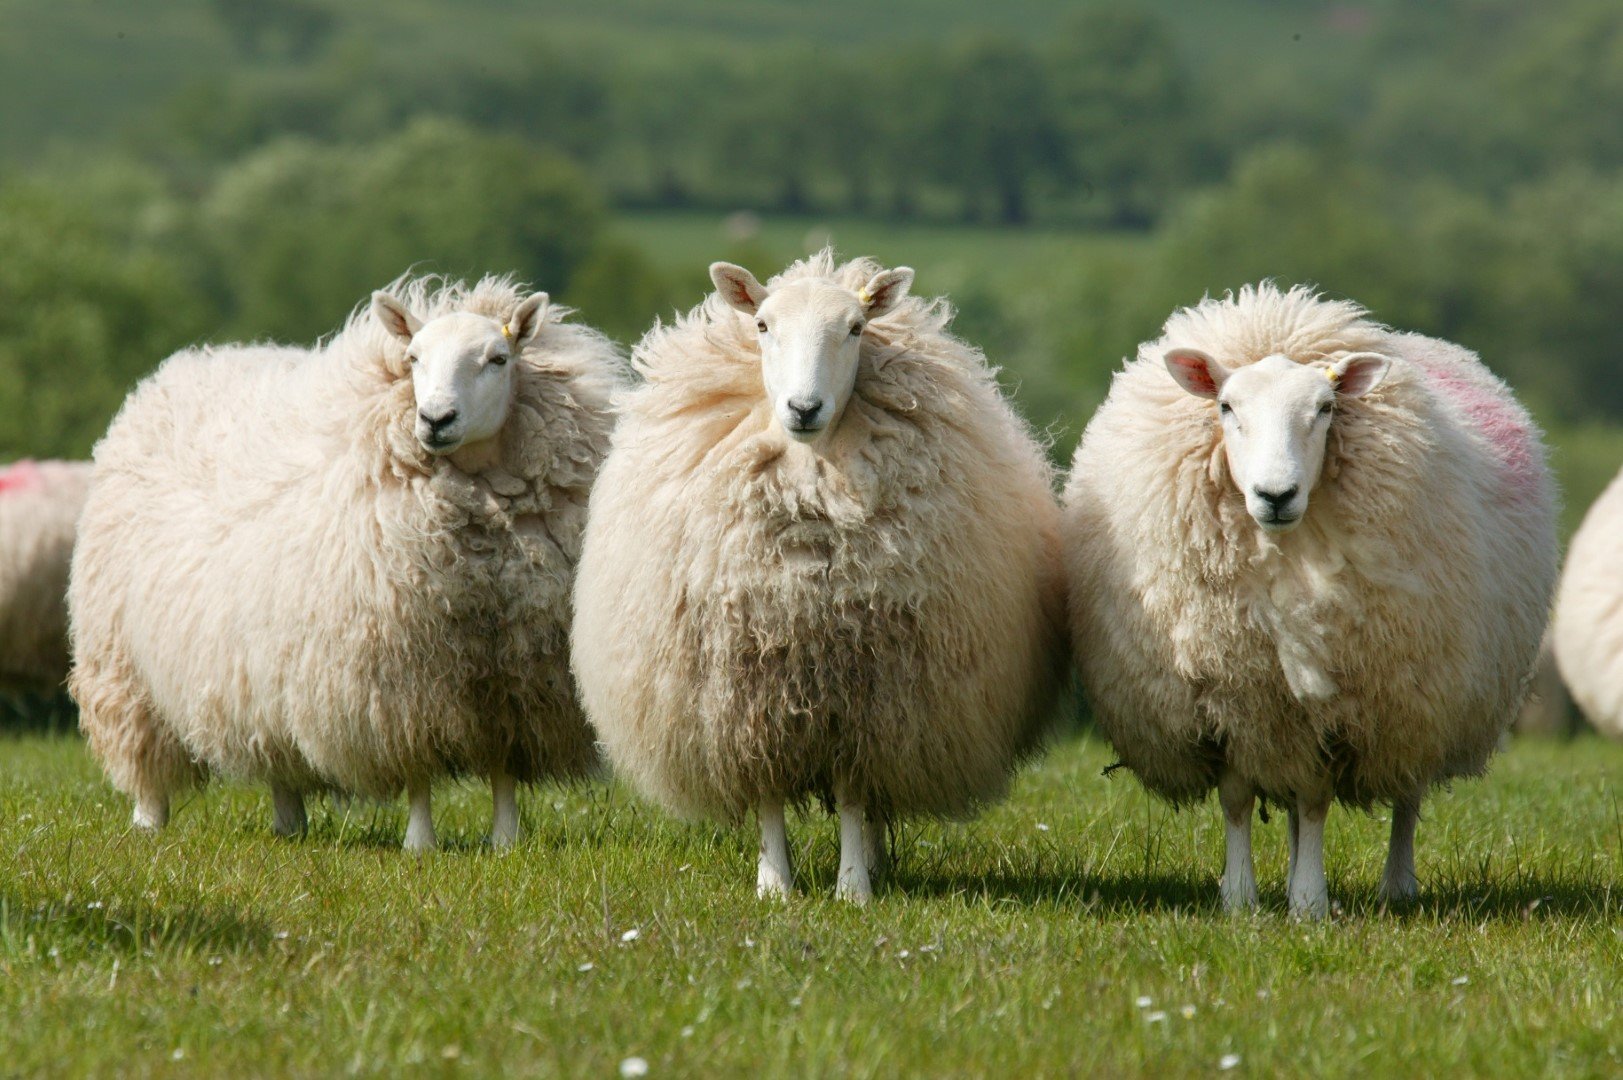 Цвет шерсти овец. Шевиот порода овец. Овцы породы меринос. Шевиот (Cheviot). Шленская порода овец.